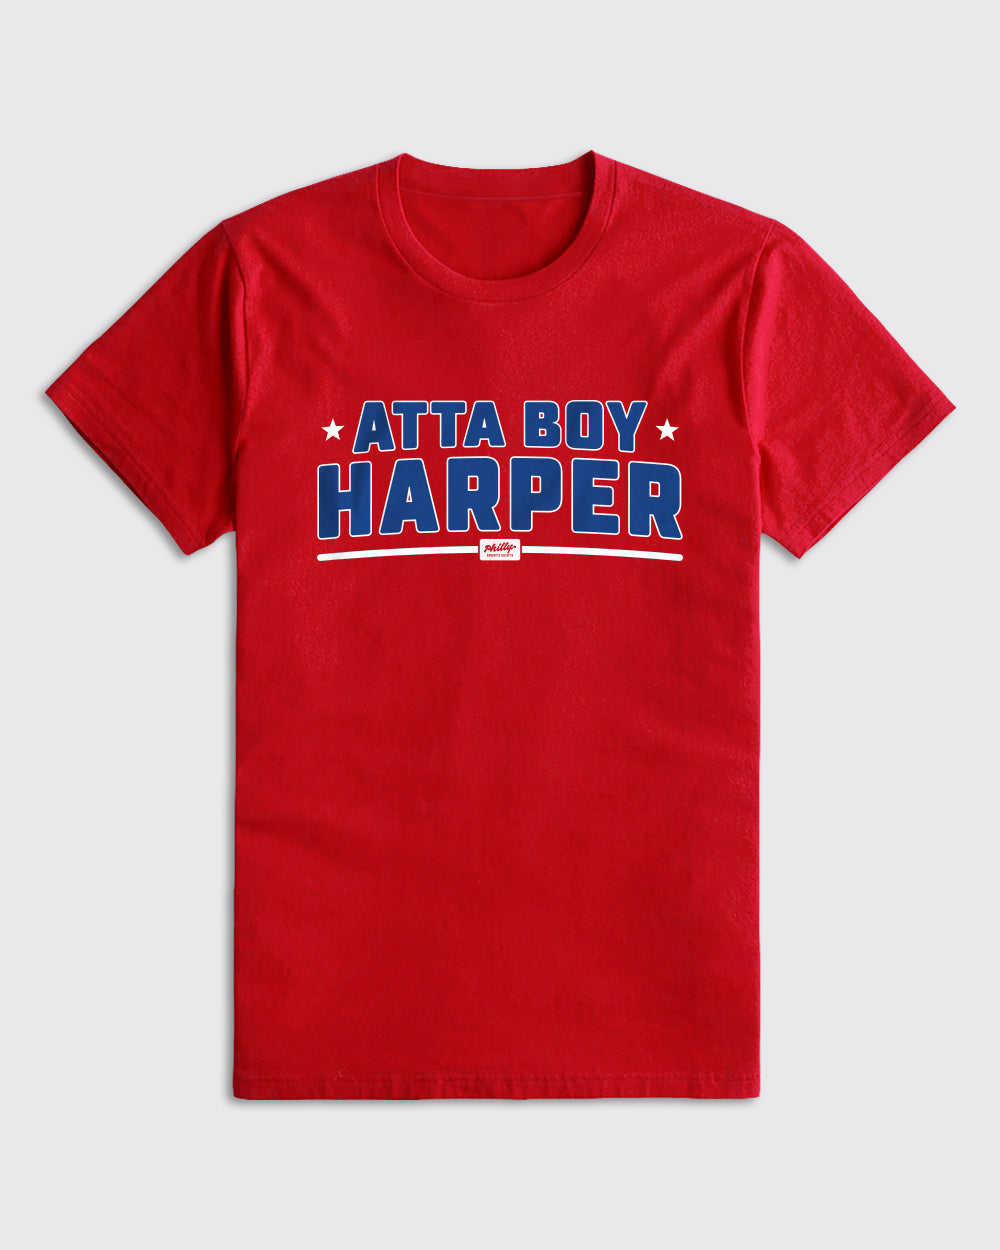 Atta Boy Harper Shirt - Phillies, T-Shirts - Philly Sports Shirts